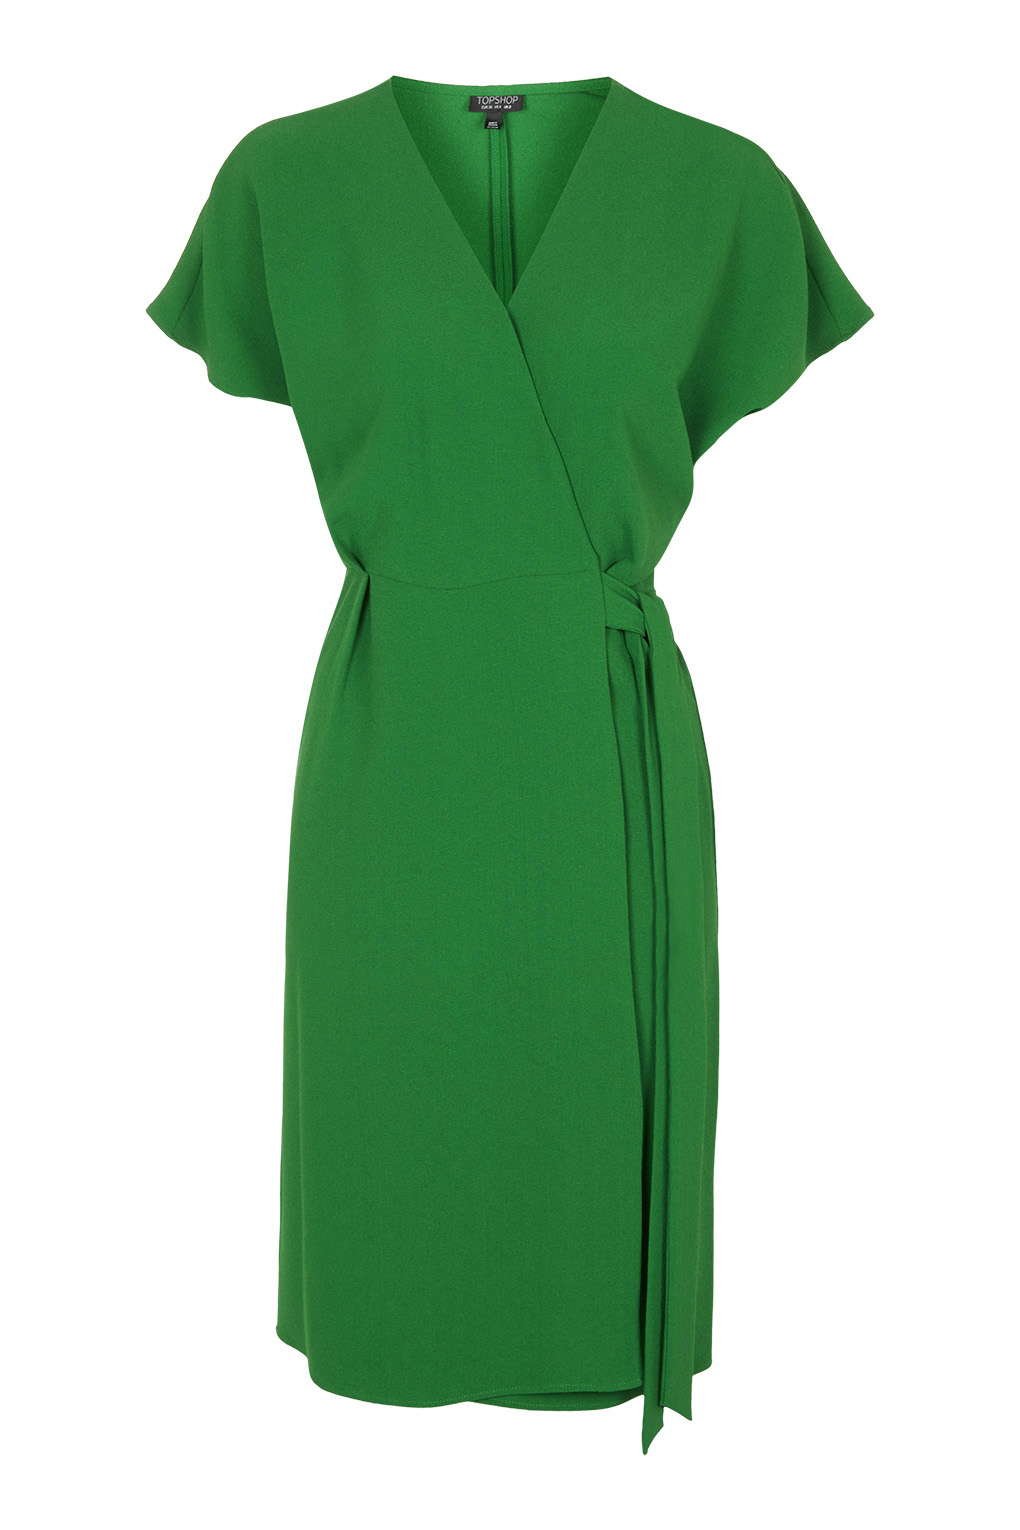 Topshop Wrap Dress in Green | Lyst